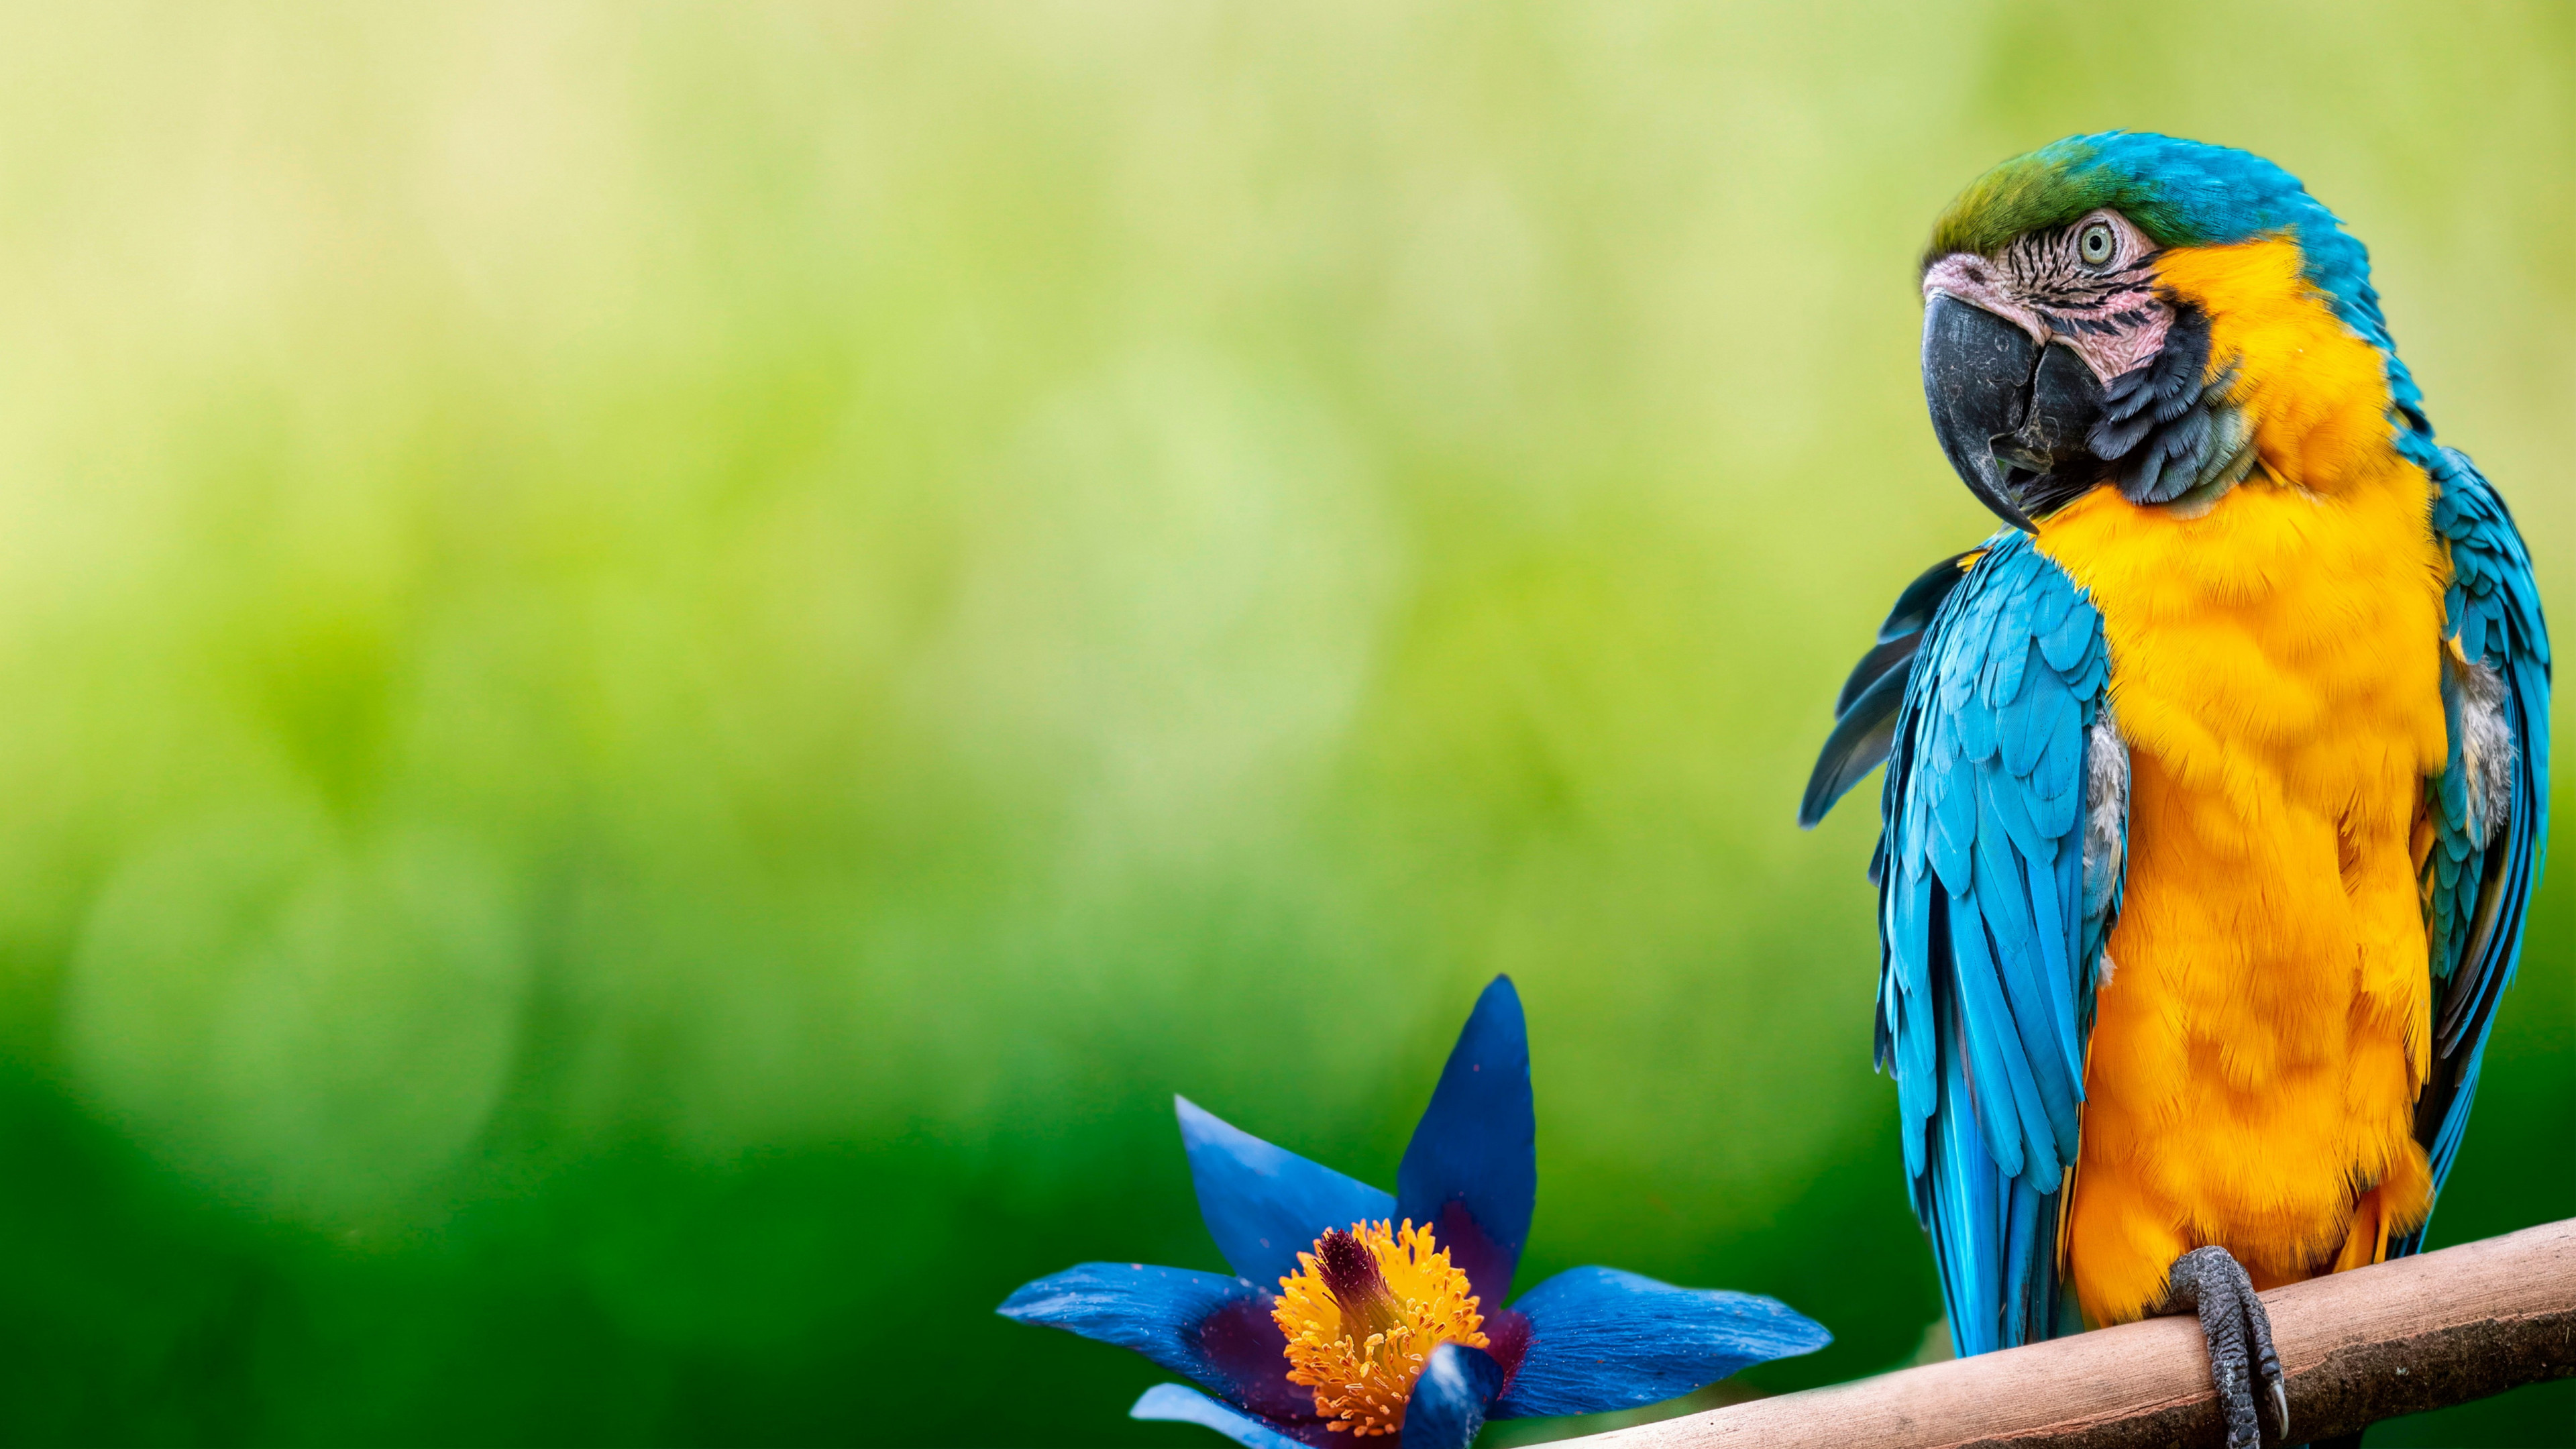 Download wallpaper: Beautiful Macaw 3840x2160